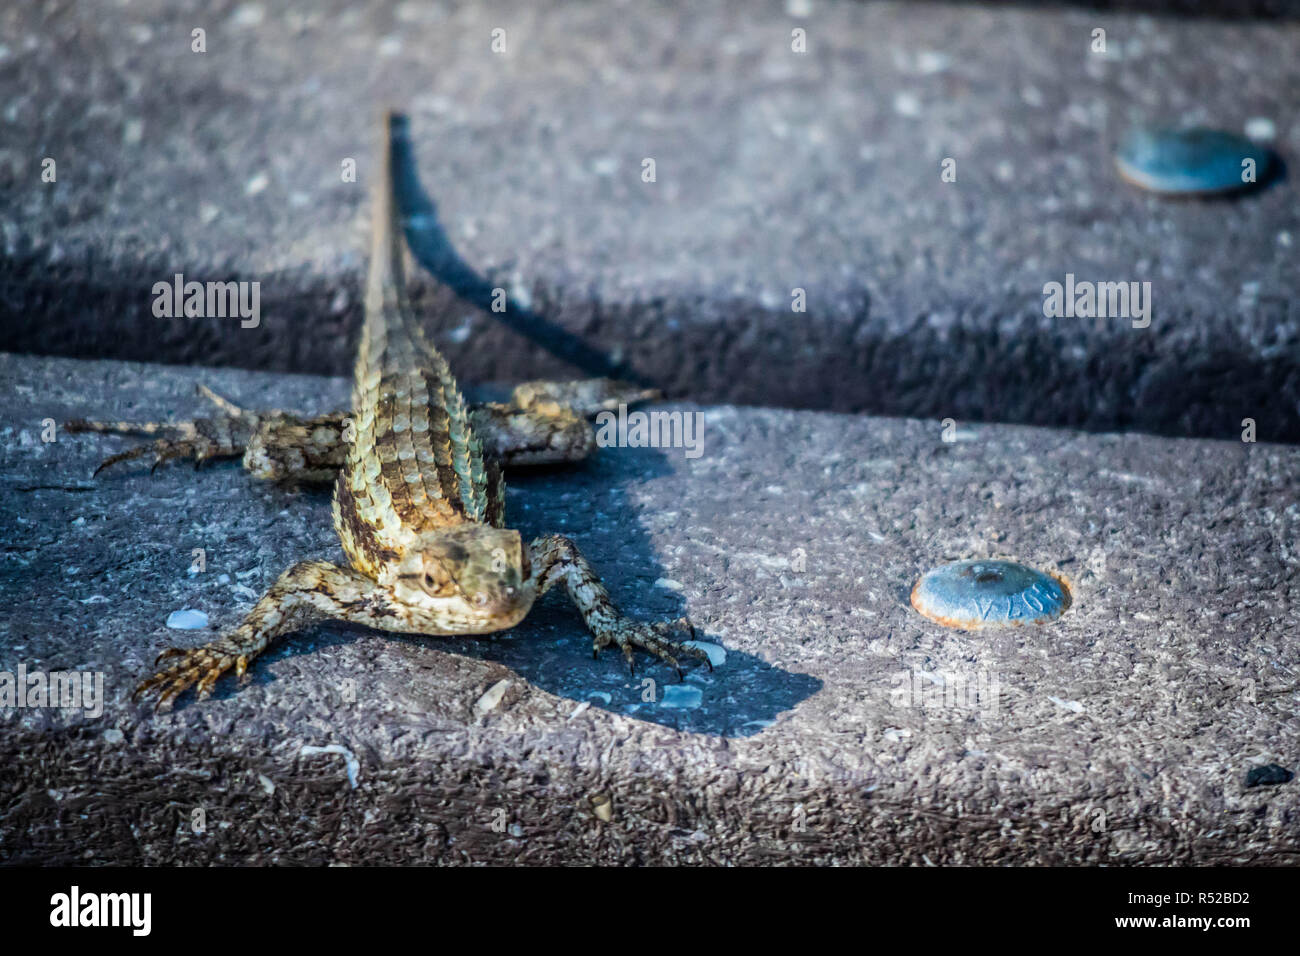 A Texas Spiny Lizard in Harlingen, Texas Stock Photo